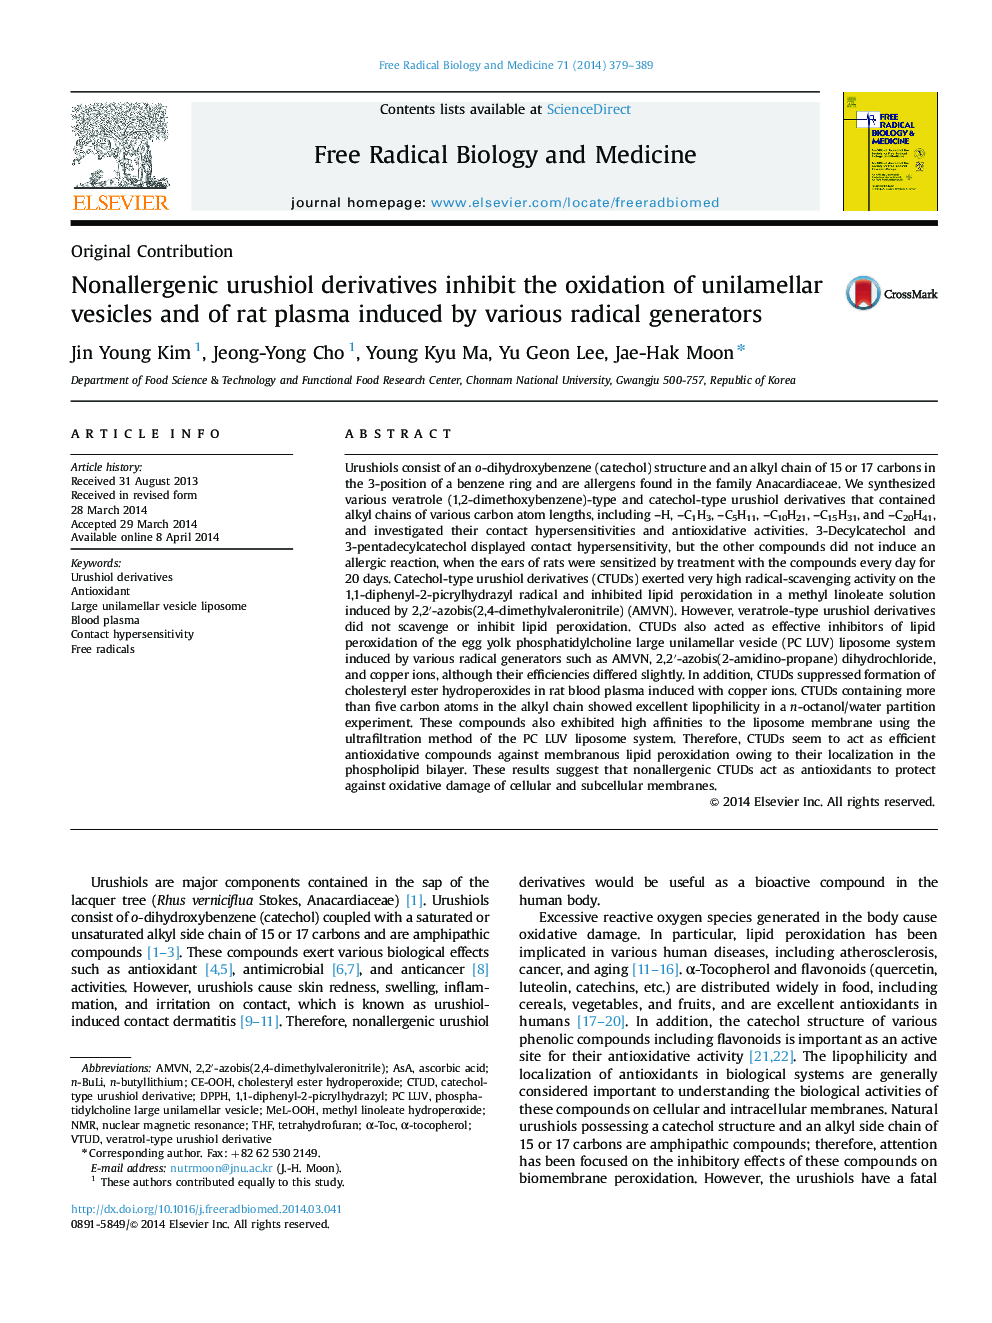 Nonallergenic urushiol derivatives inhibit the oxidation of unilamellar vesicles and of rat plasma induced by various radical generators